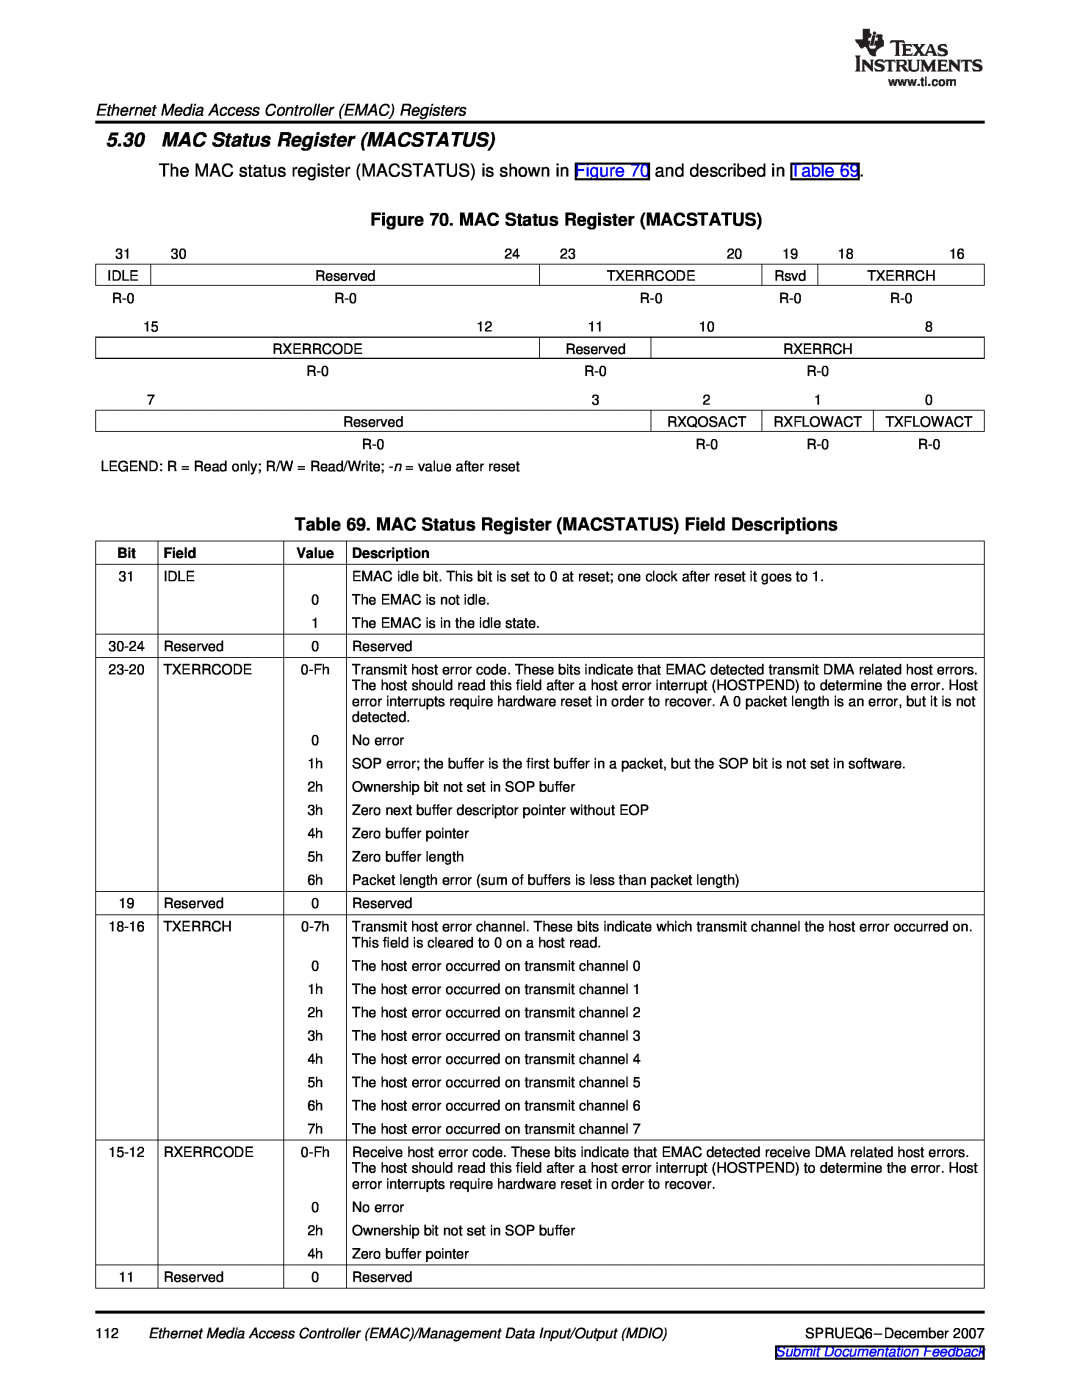 Texas Instruments TMS320DM646x manual MAC Status Register MACSTATUS Field Descriptions, Submit Documentation Feedback 